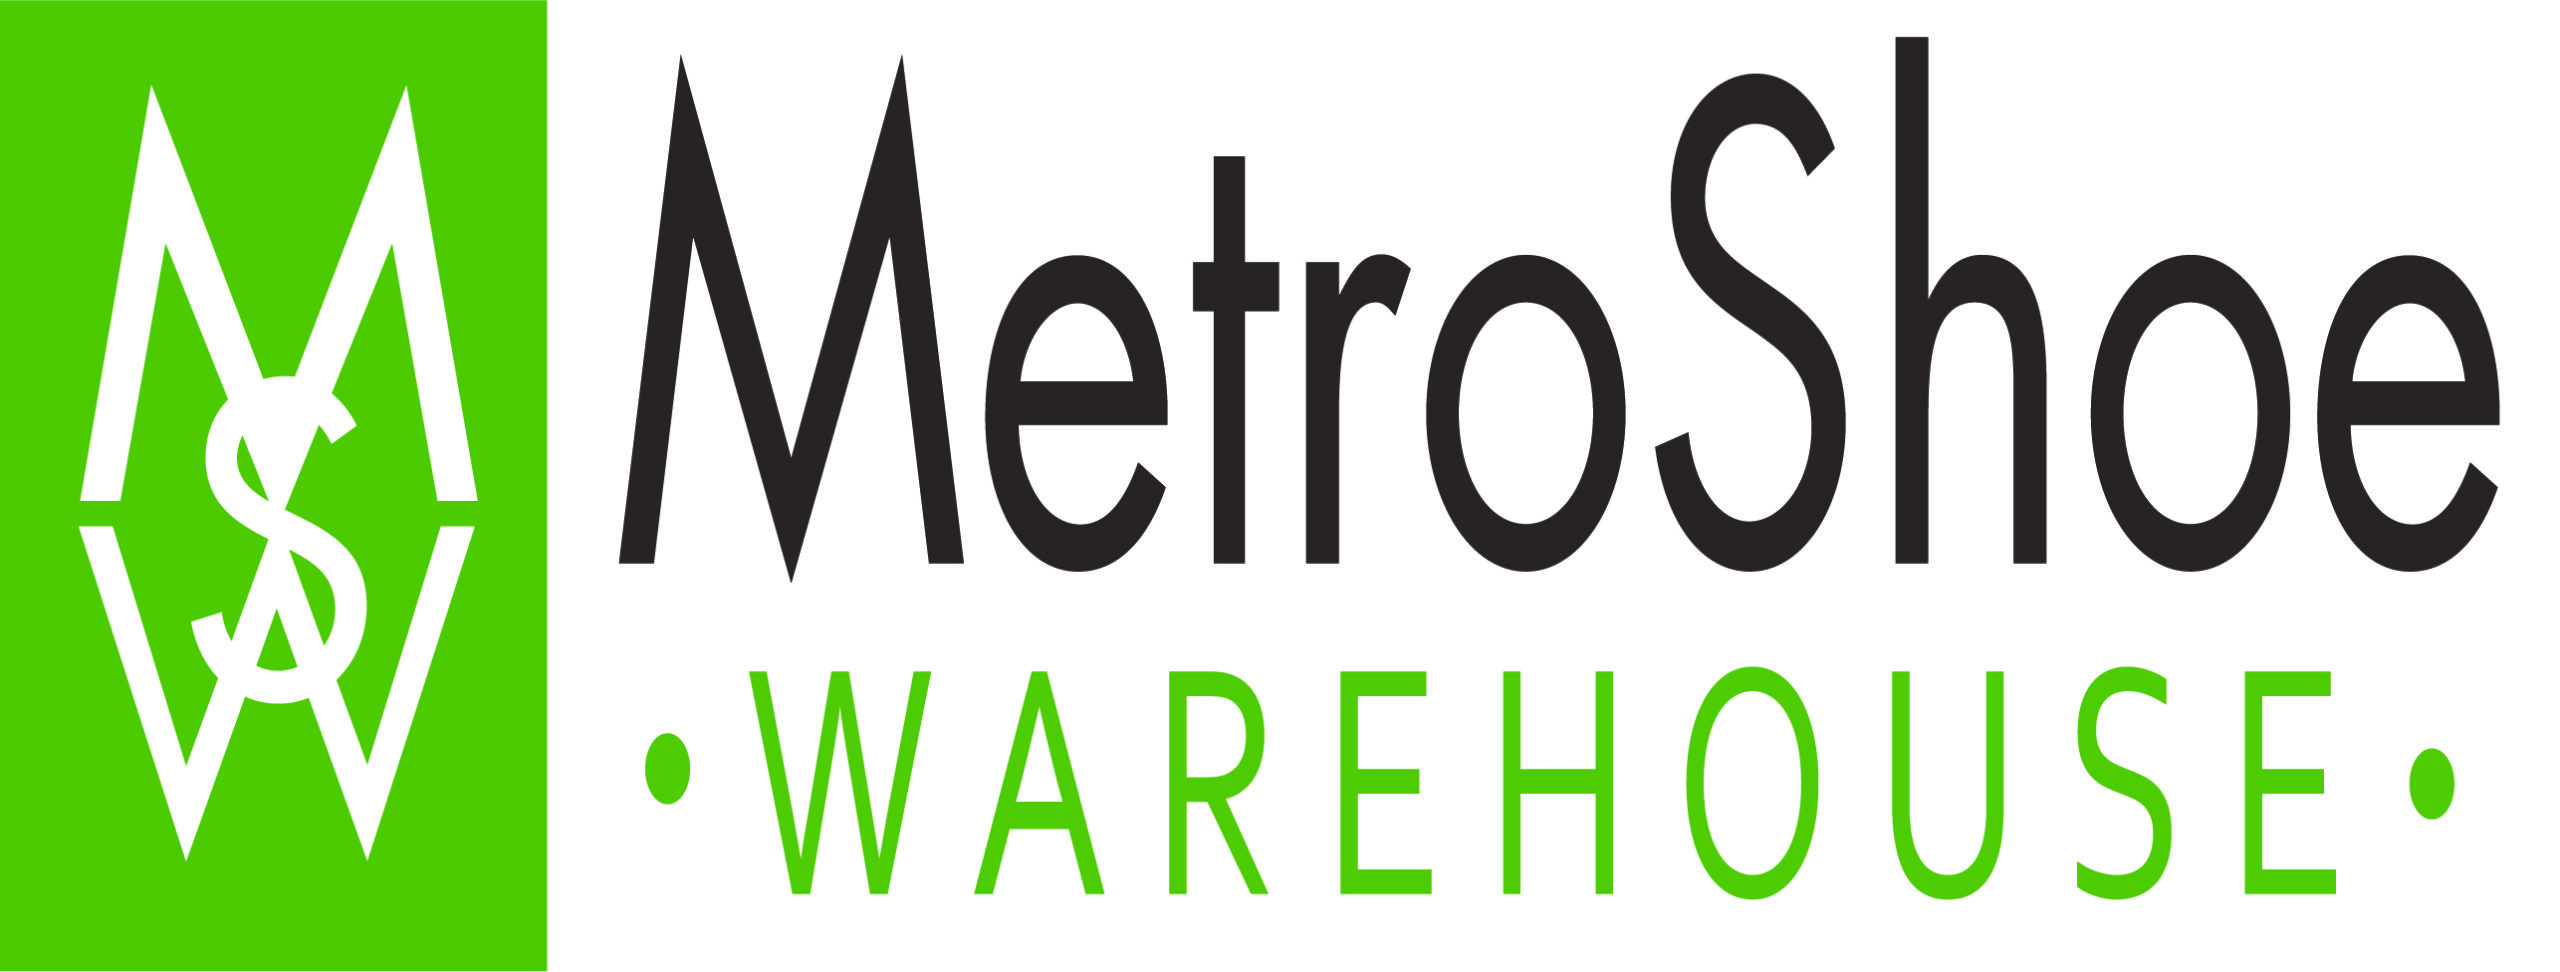 Born - MetroShoe Warehouse